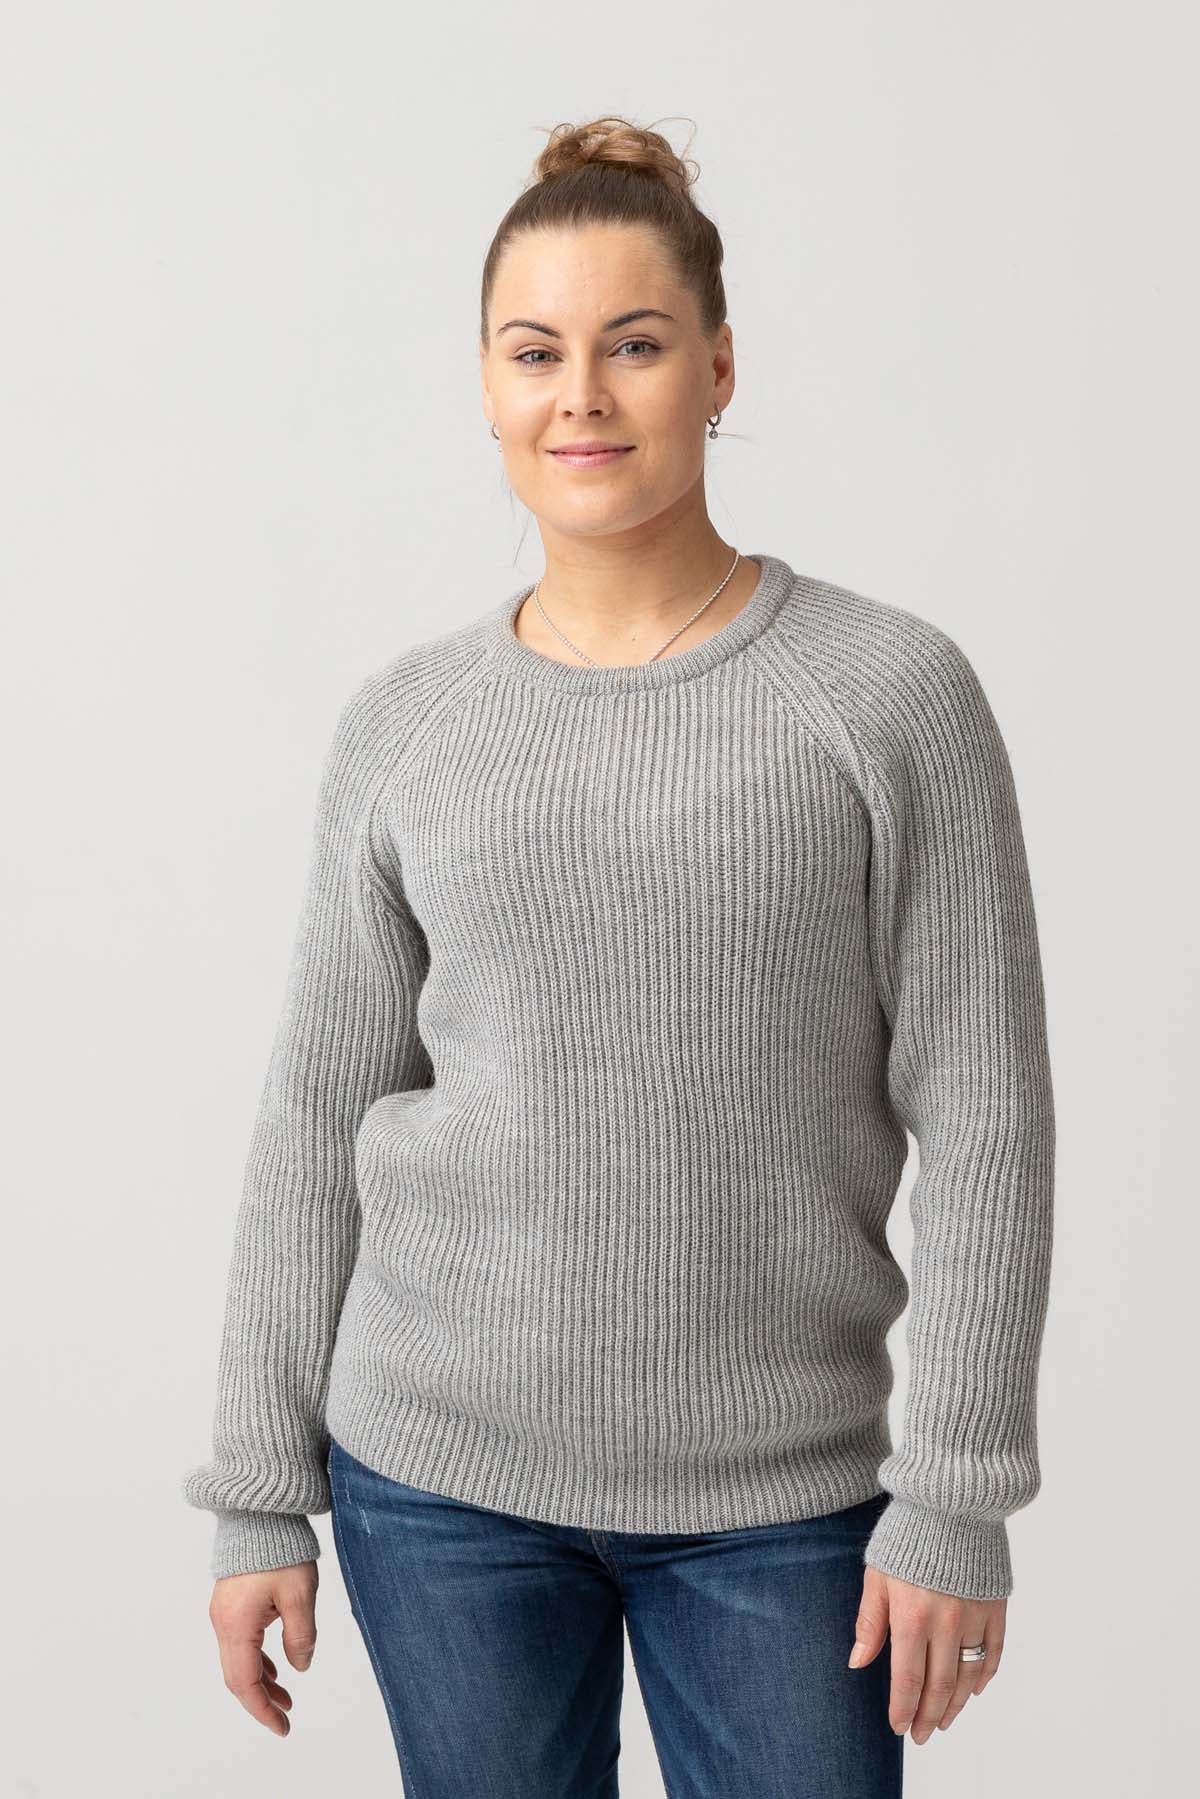 Colca sweater - light gray